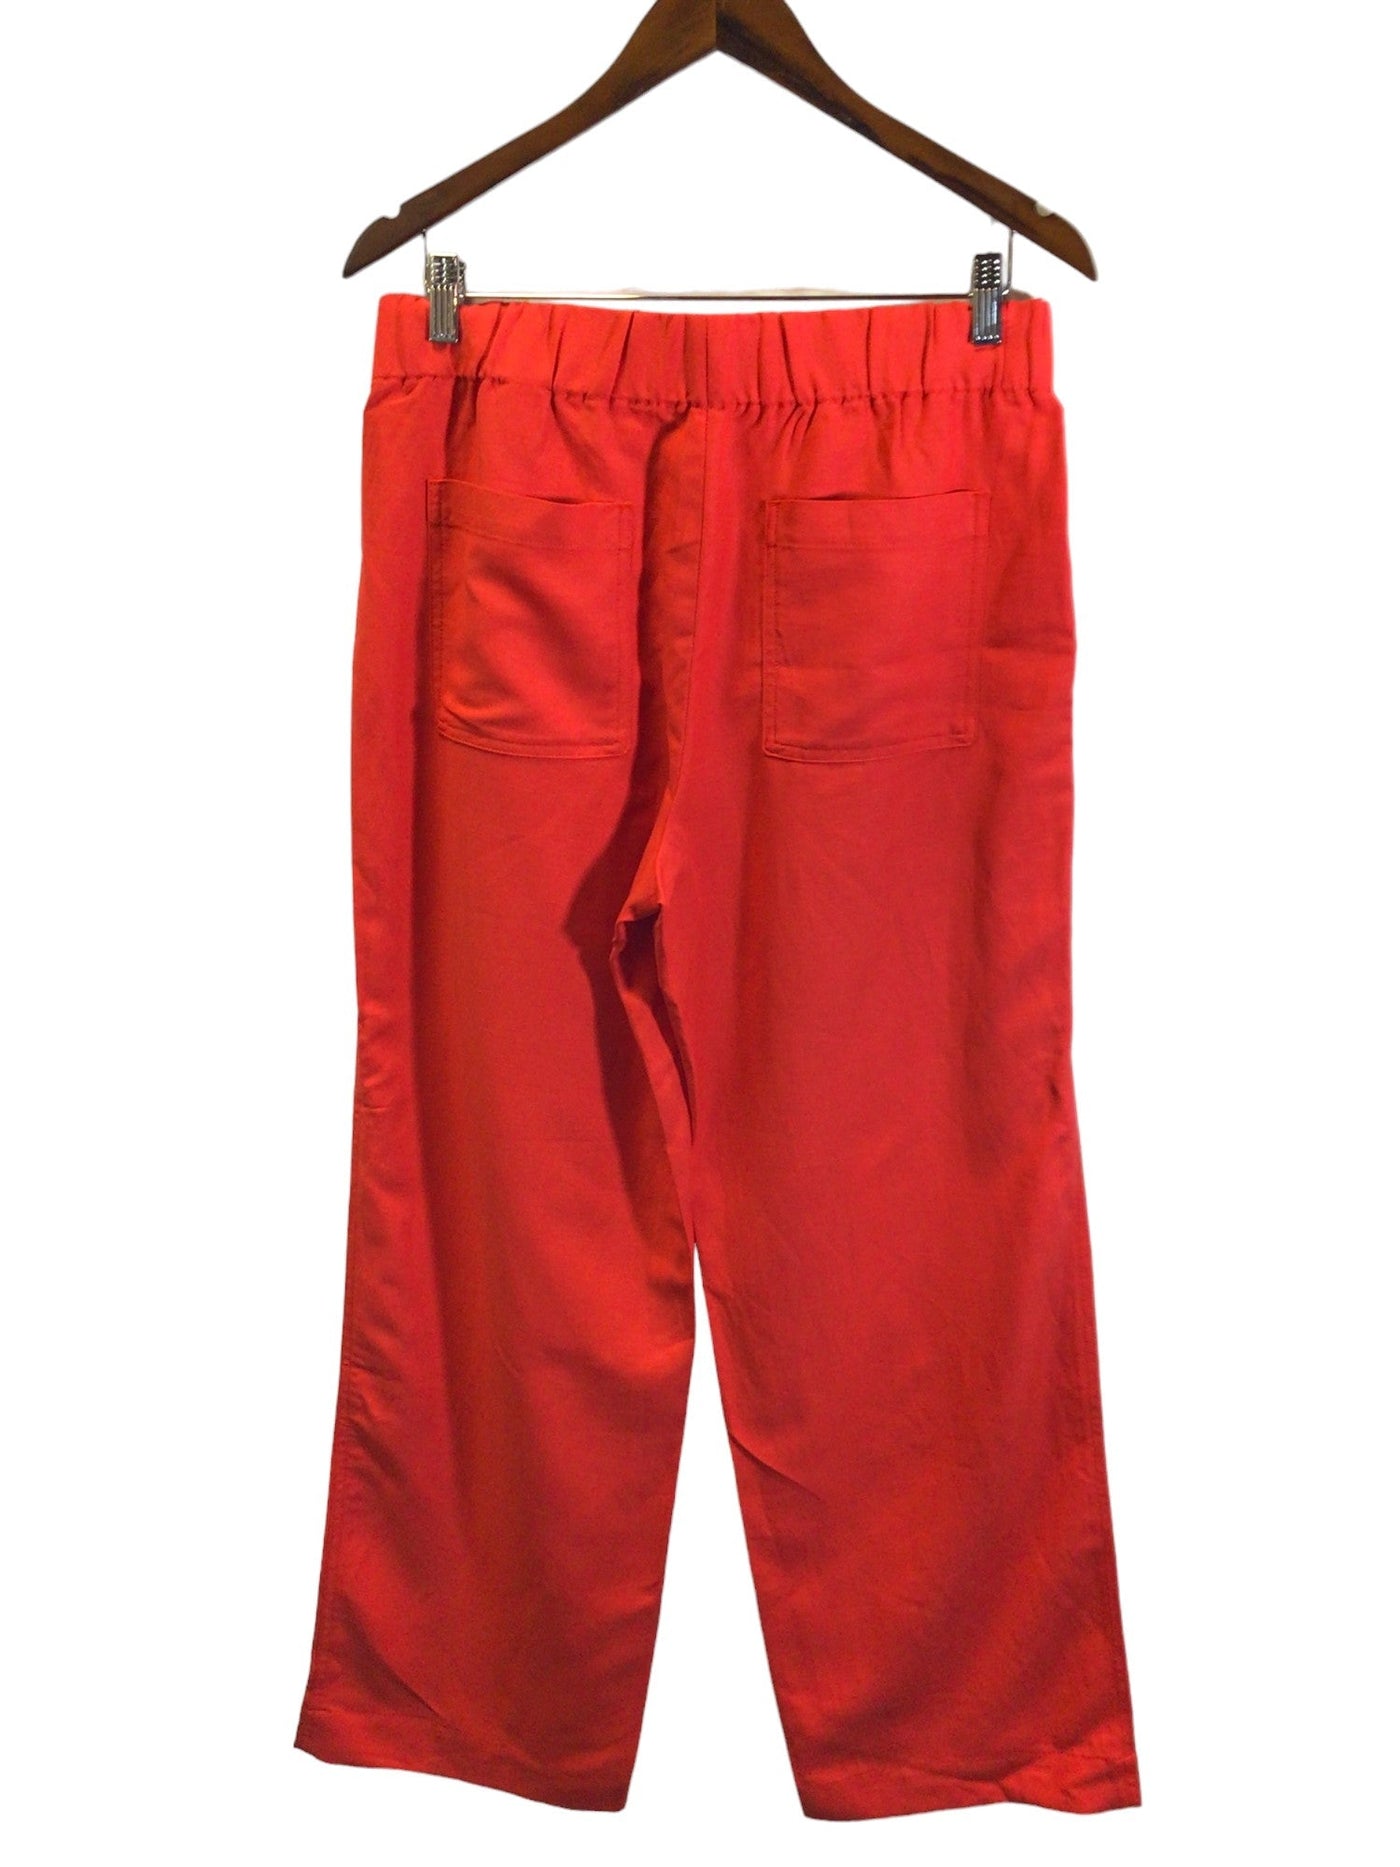 BANANA REPUBLIC Women Work Pants Regular fit in Red - Size M | 17 $ KOOP